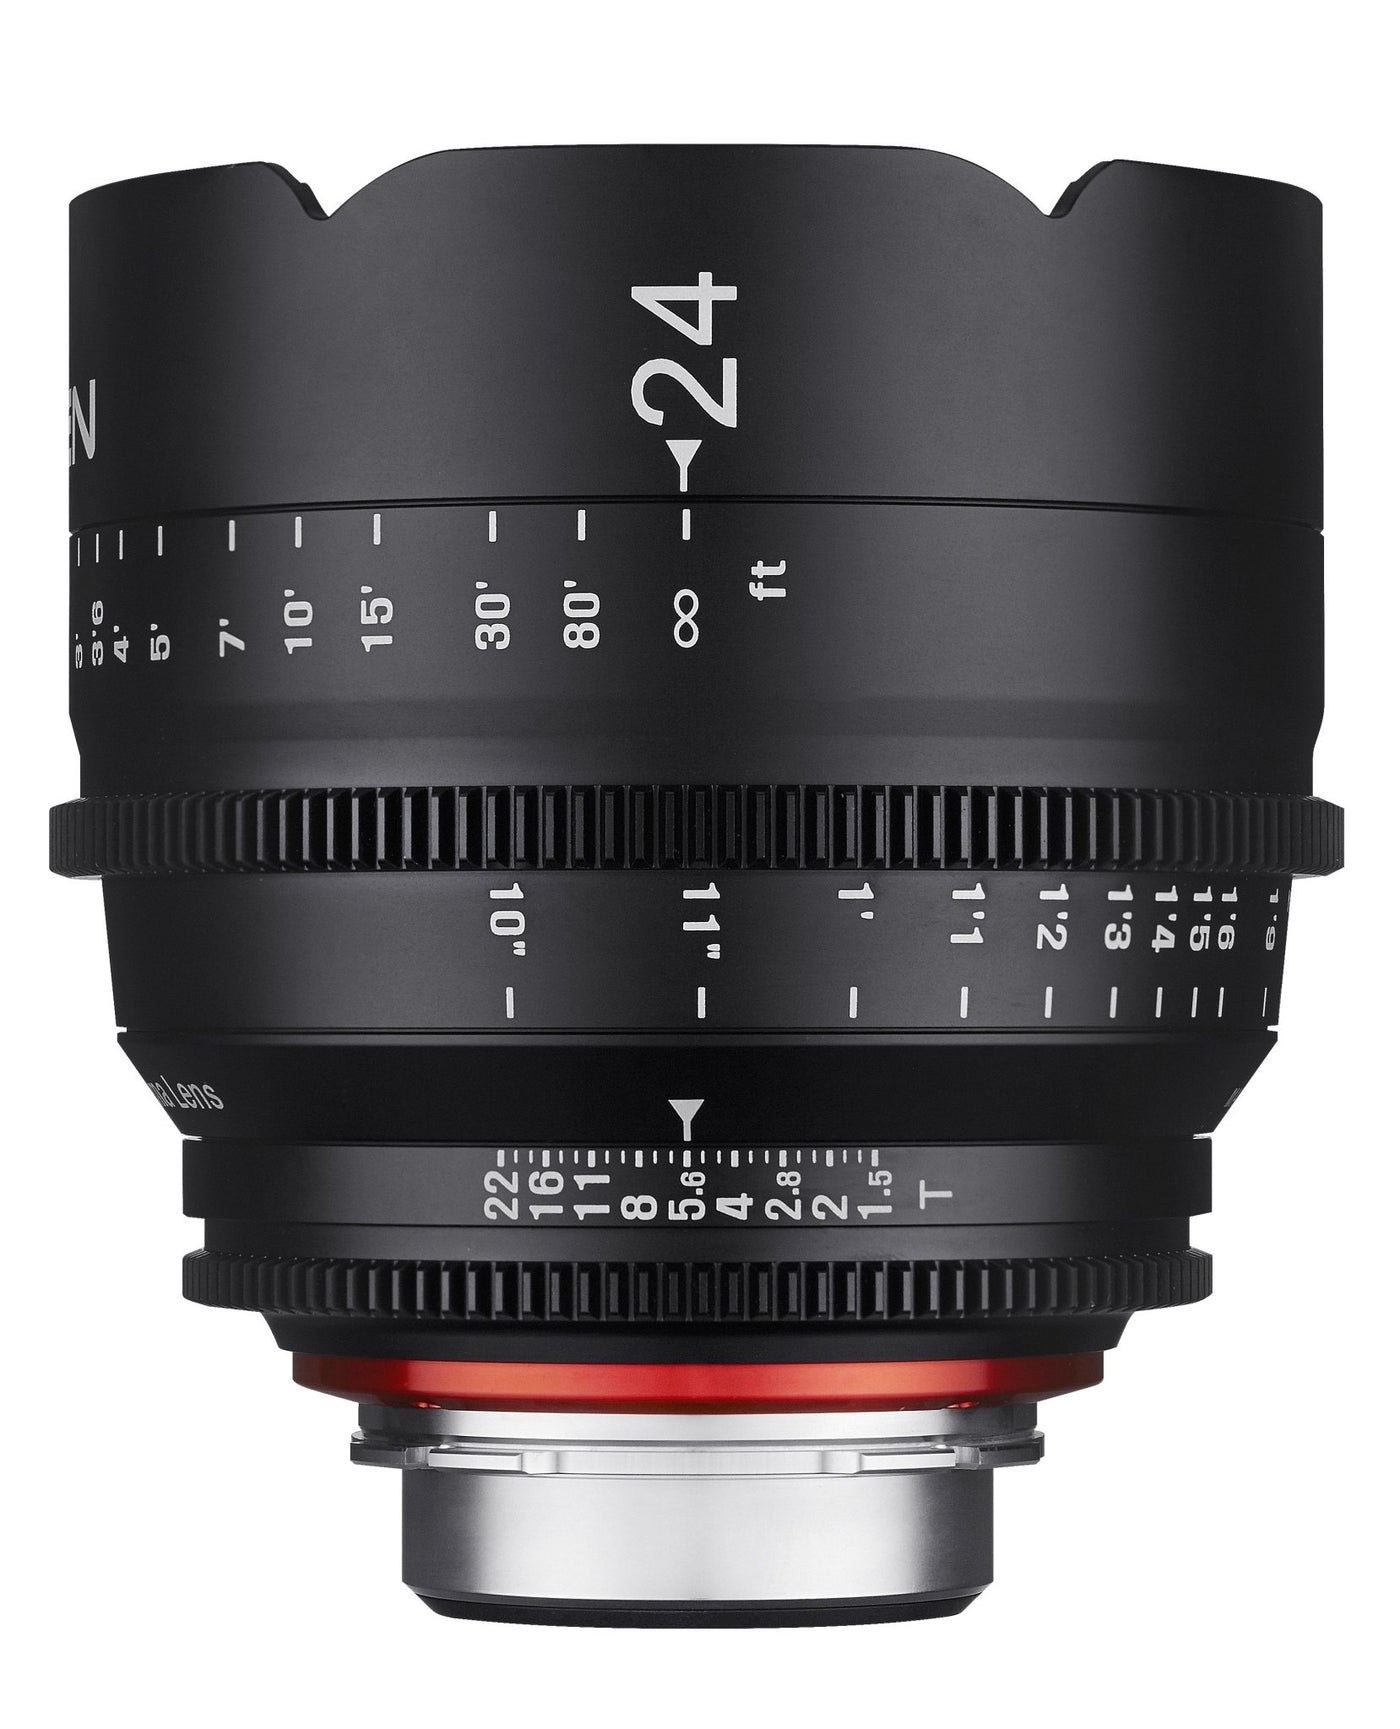 24mm T1.5 Wide Angle XEEN Pro Cinema Lens - Rokinon Lenses - XN24-C